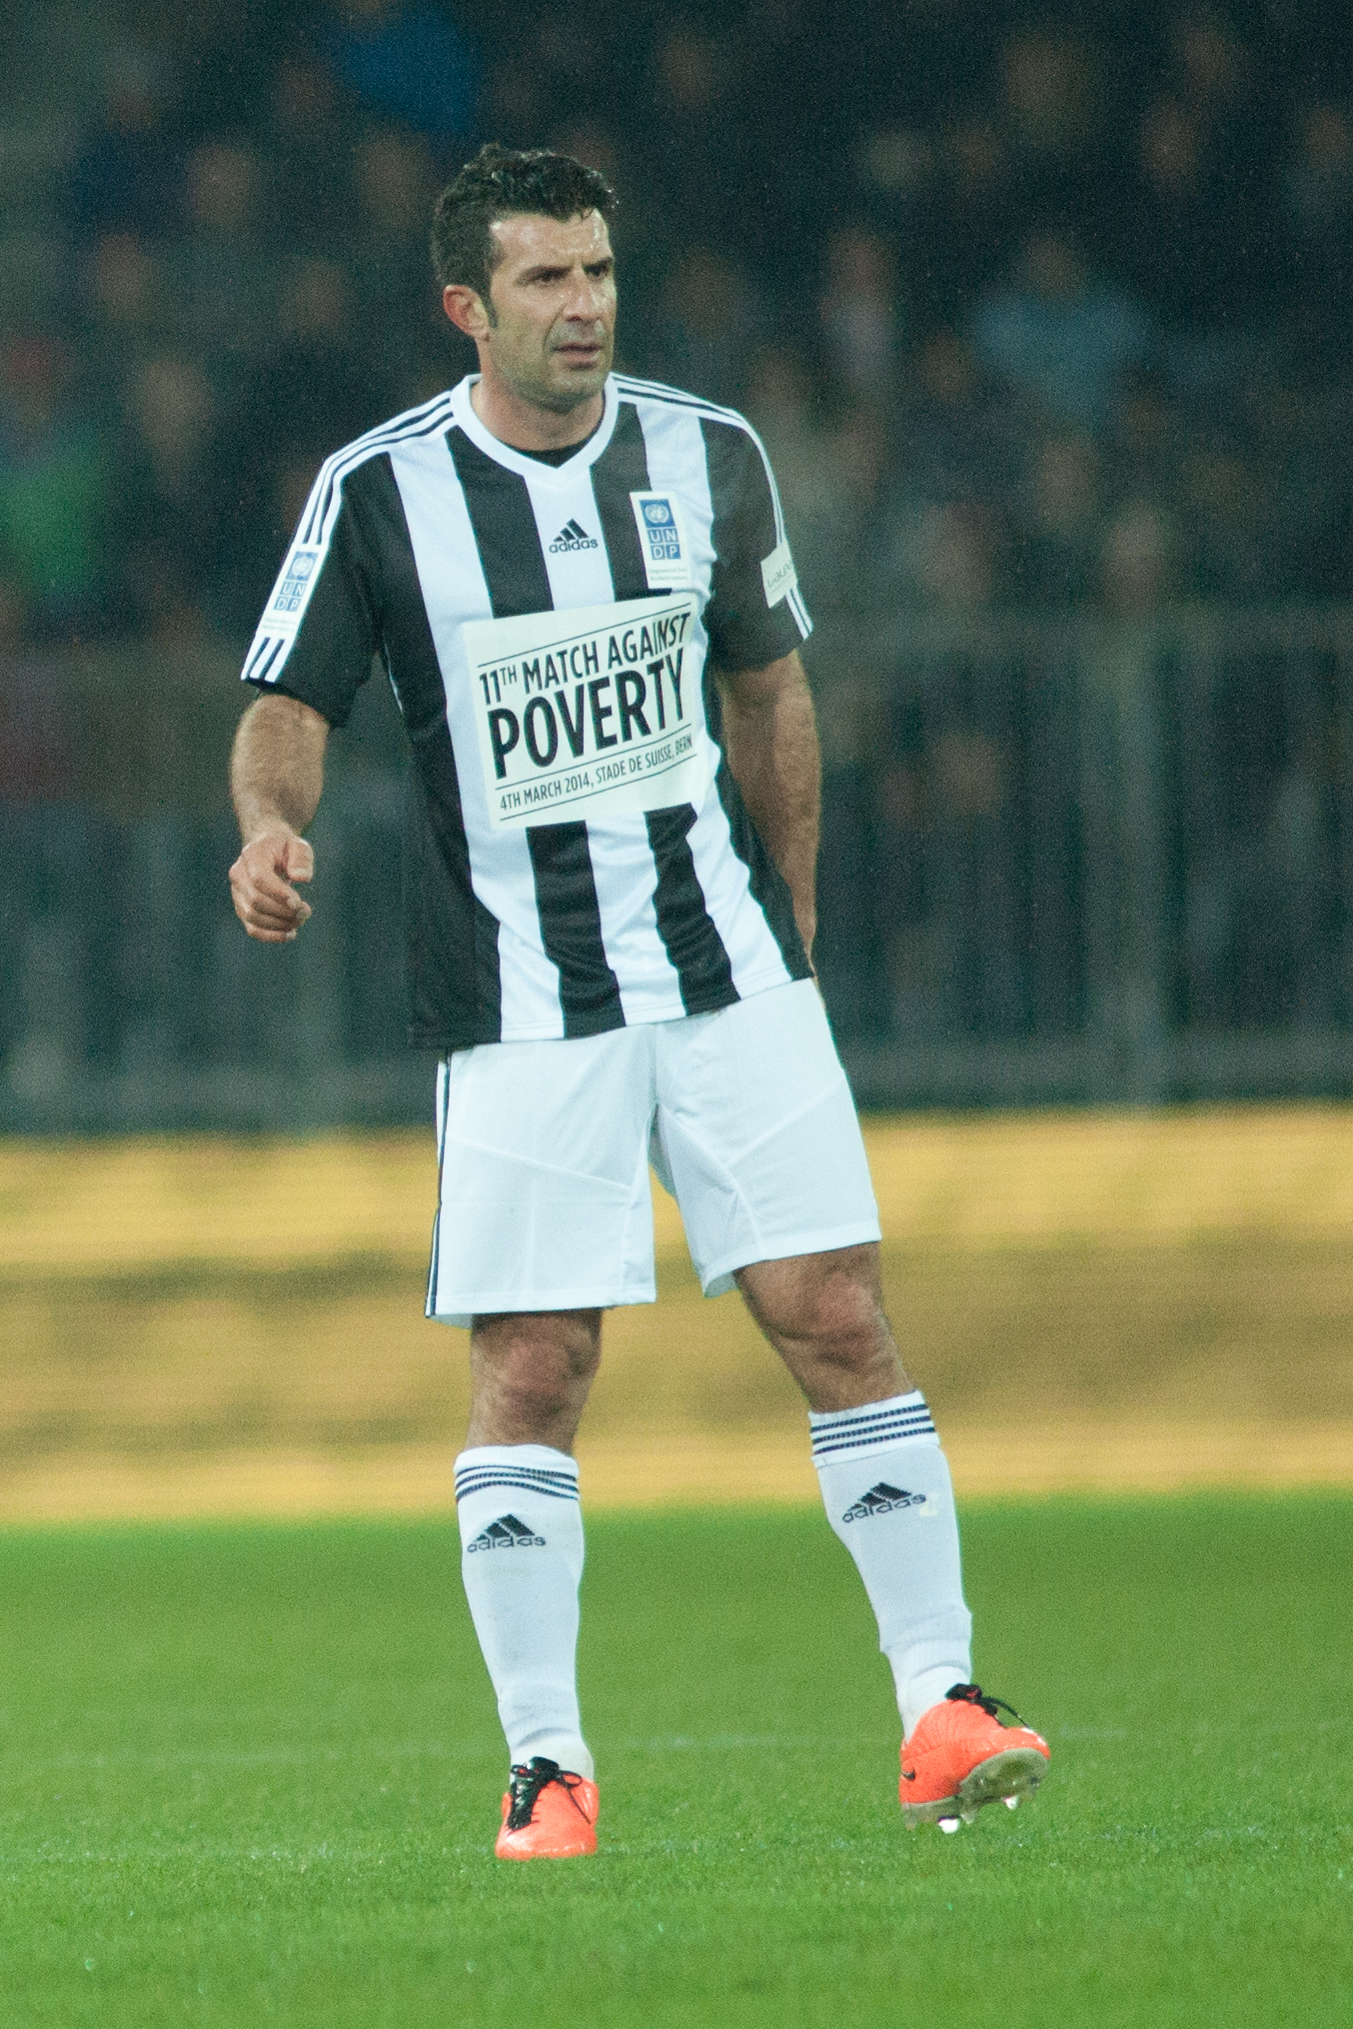 Football_against_poverty_2014_-_Luis_Figo.jpg